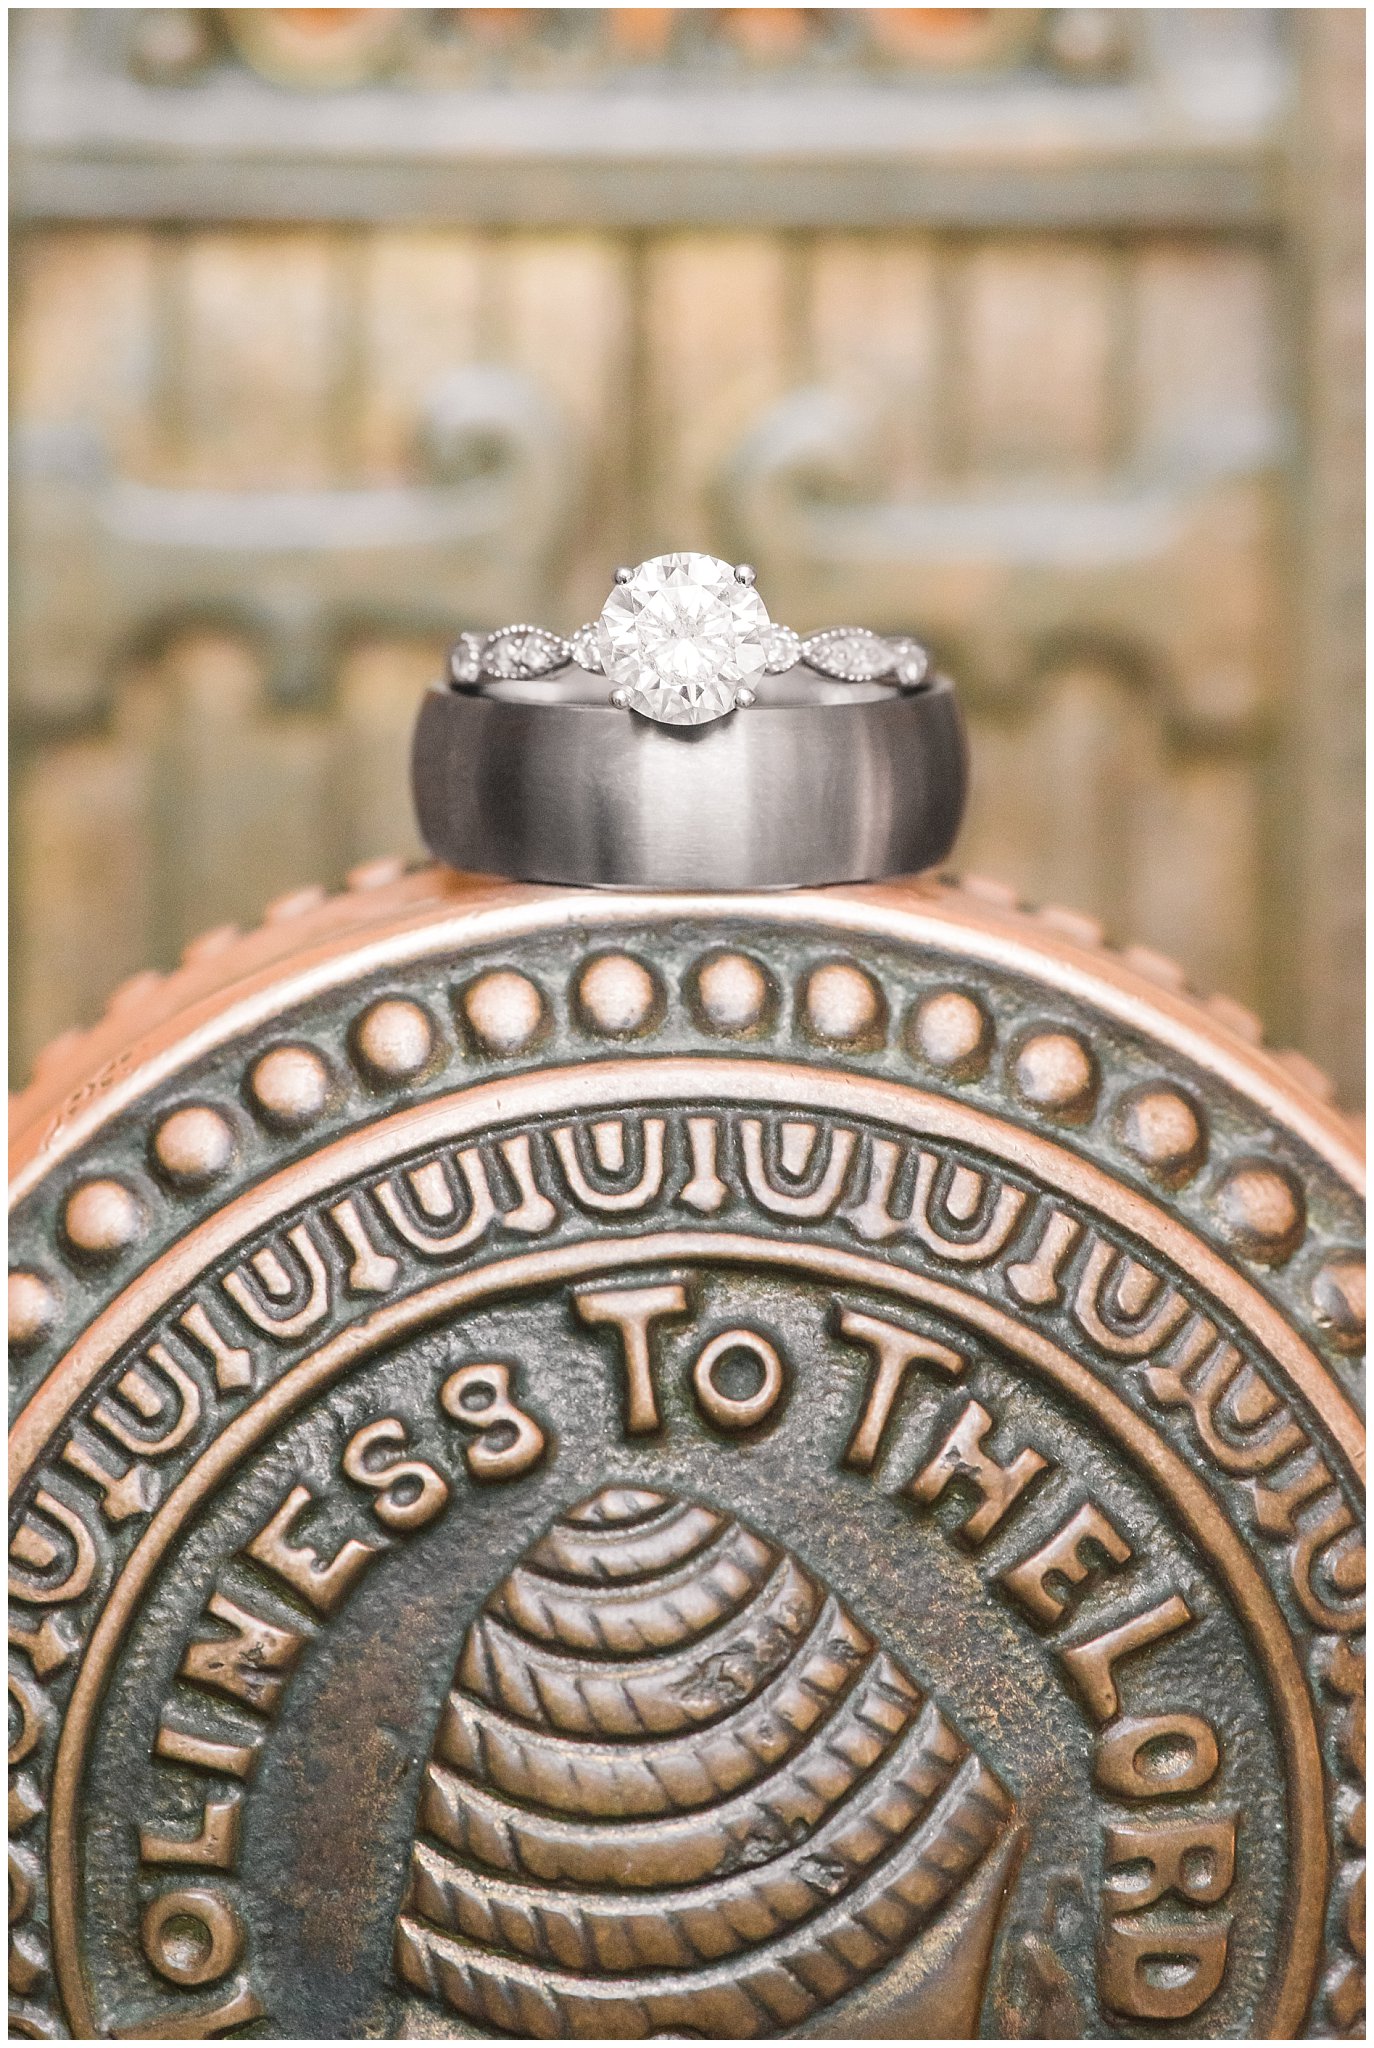 Wedding ring shot on the Salt Lake Temple door handle | Elegant formal session at the Salt Lake Temple and Ensign Peak Formal Session | Jessie and Dallin Photography